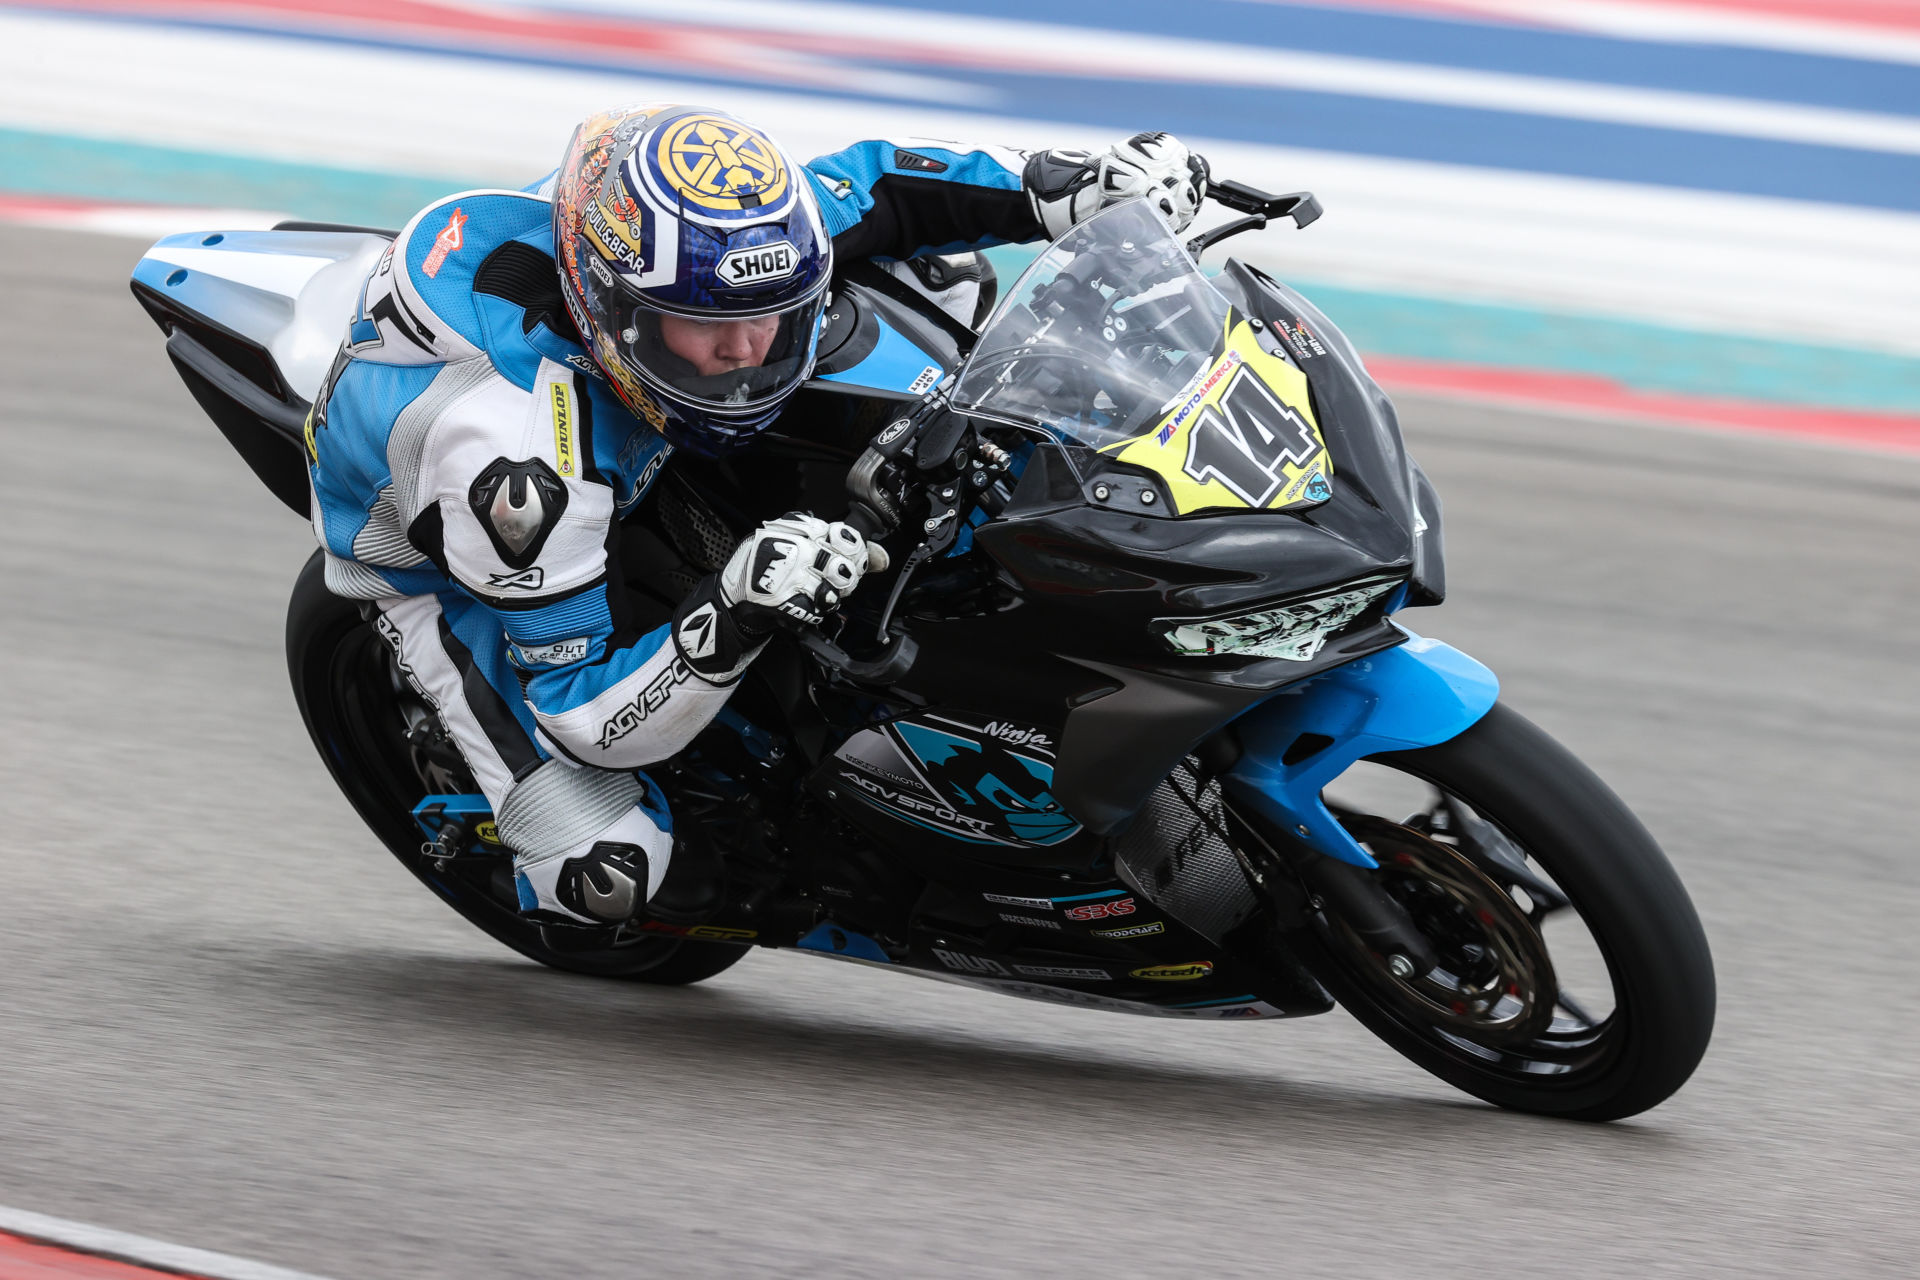 North Texas Superbikes/Monkey Moto-backed MotoAmerica Junior Cup racer Chase Black at speed on his Kawasaki Ninja 400. Photo by Brian J. Nelson, courtesy North Texas Superbikes.